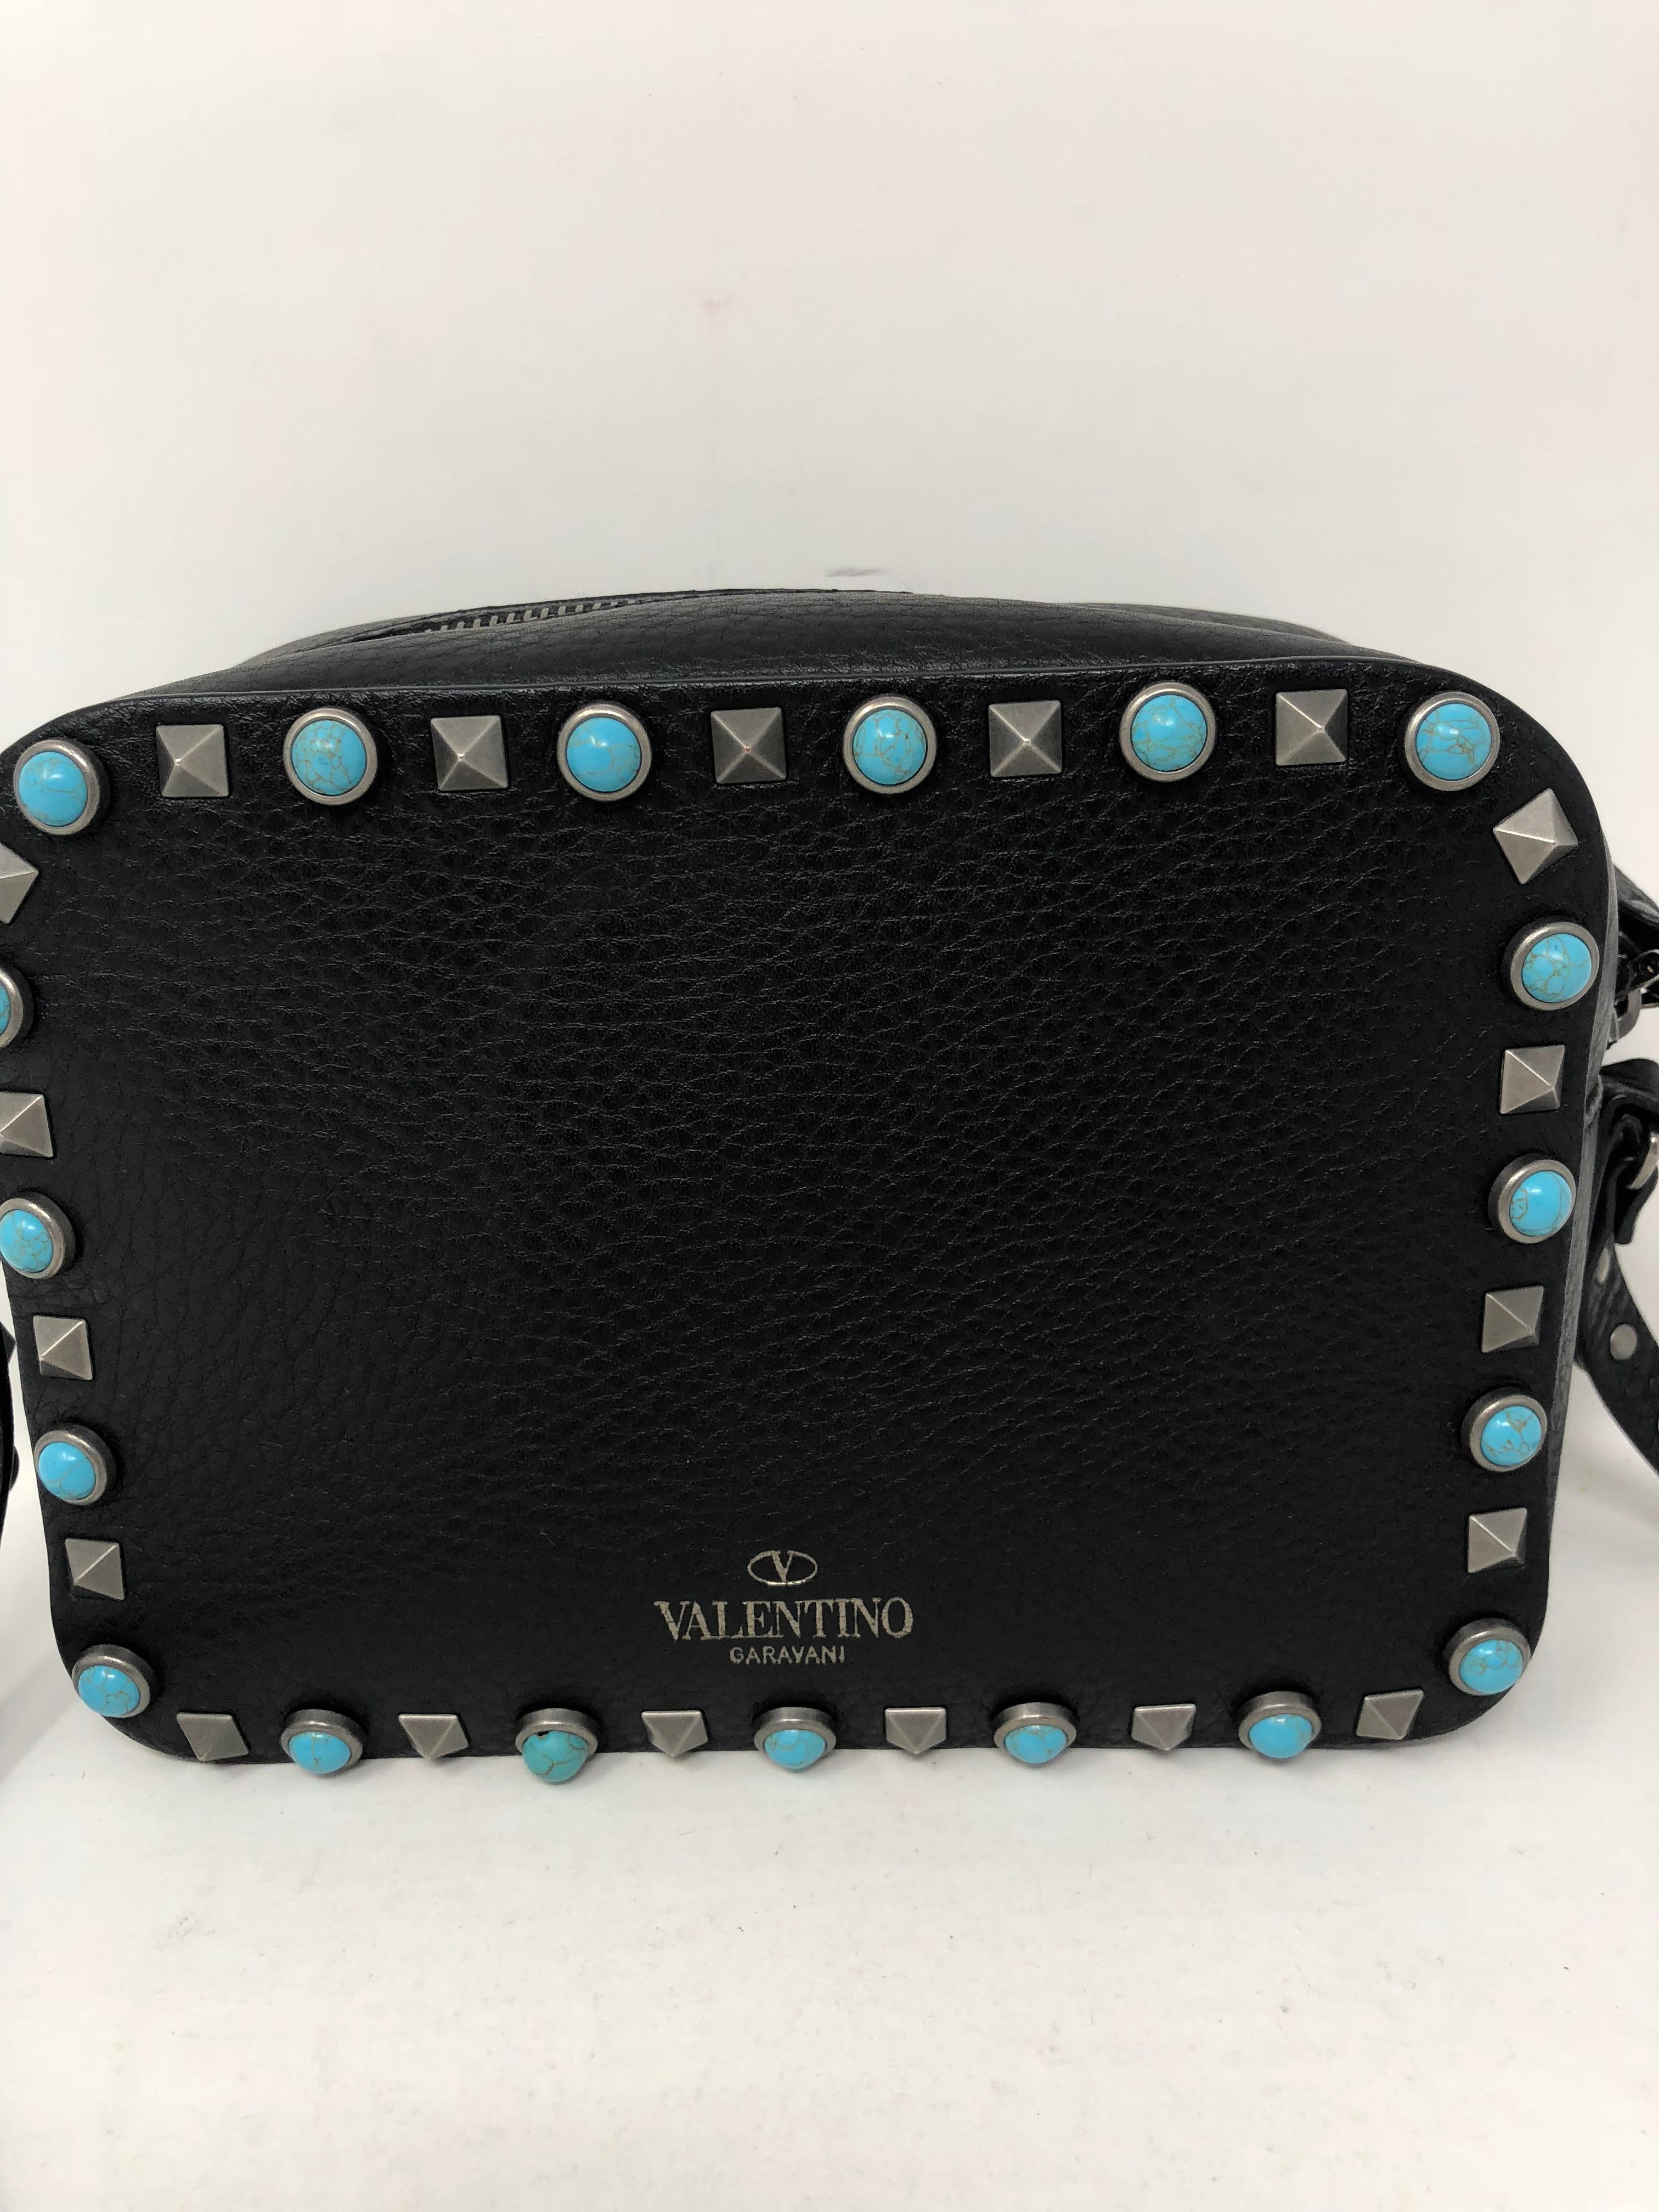 Valentino Black Pebbled Leather Rockstud Turqoise Stone Crossbody. Brand new. Guaranteed authentic. 